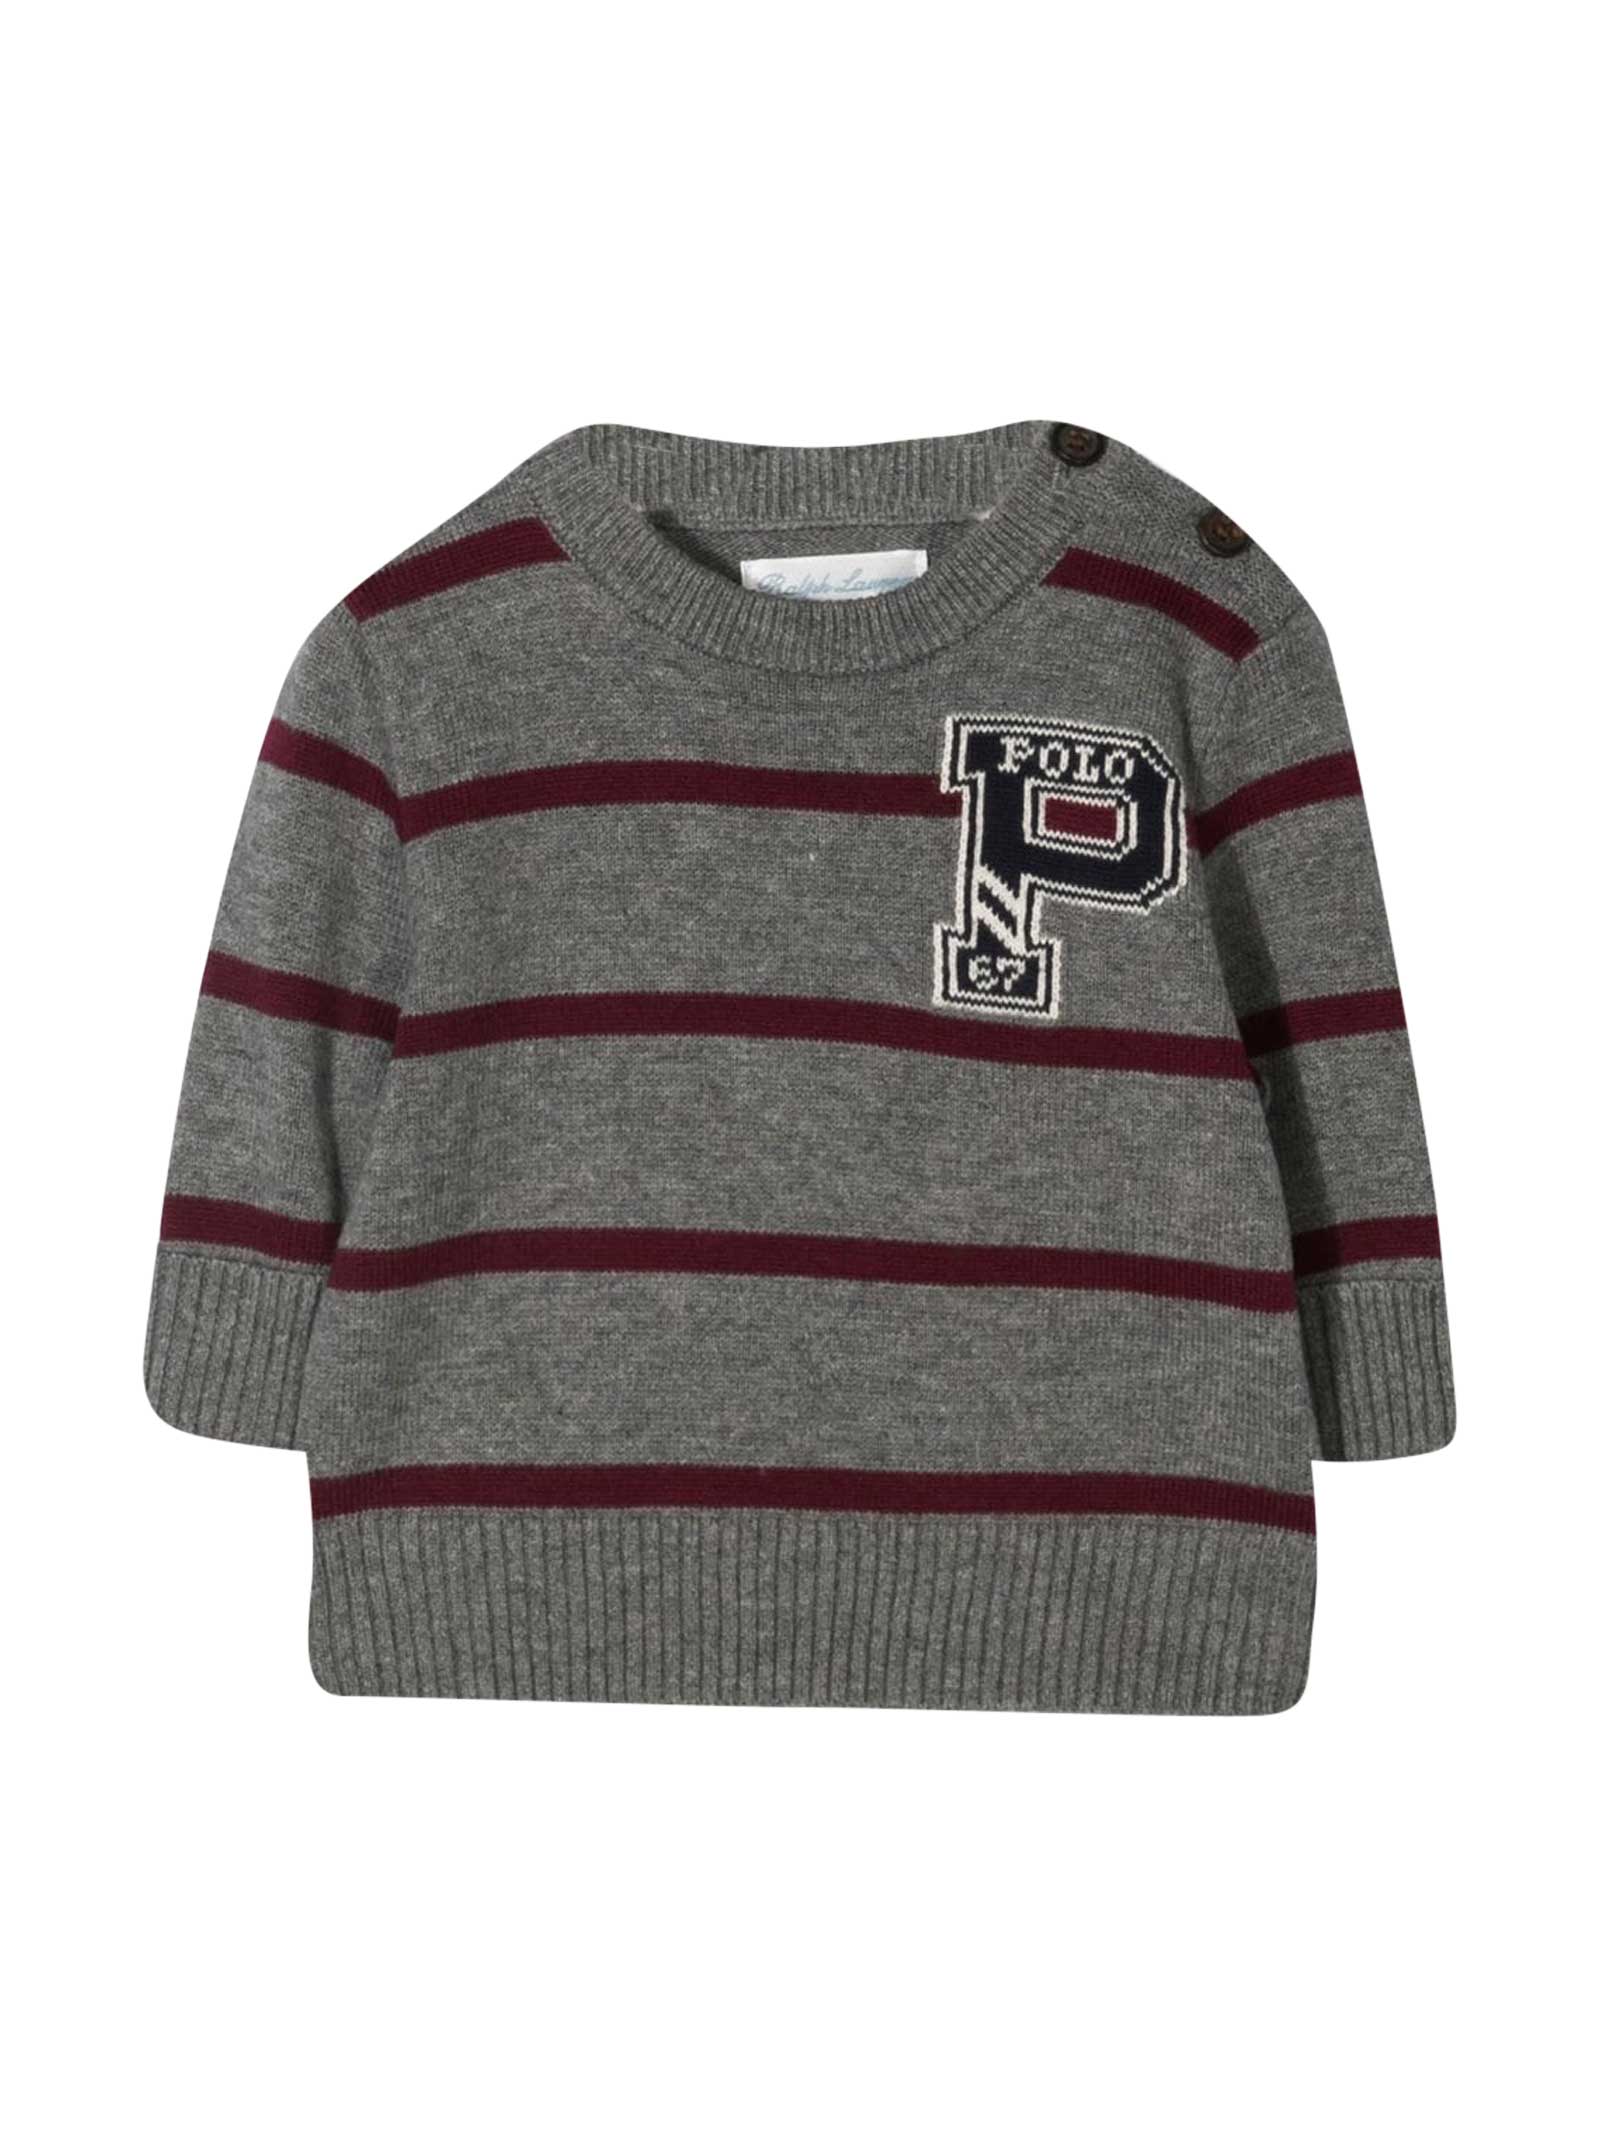 Ralph Lauren Gray Striped Sweater